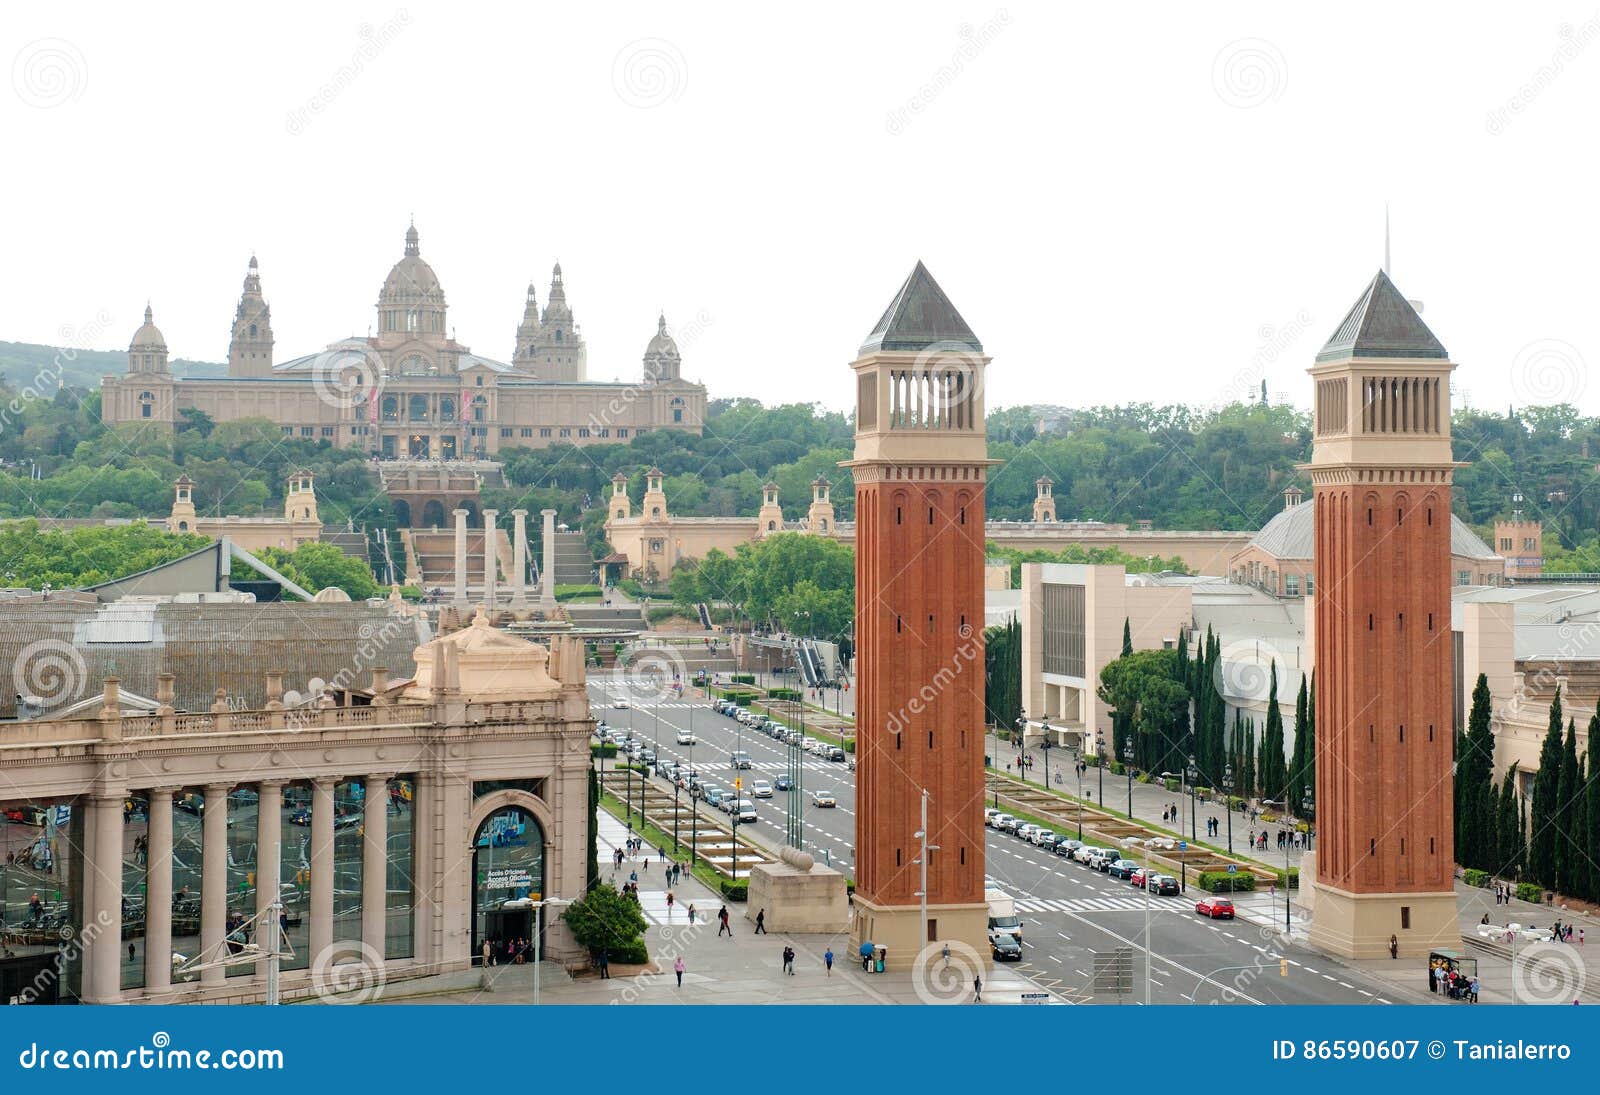 barcelona, spain - plaza de espana panoramic view, on background national art museum